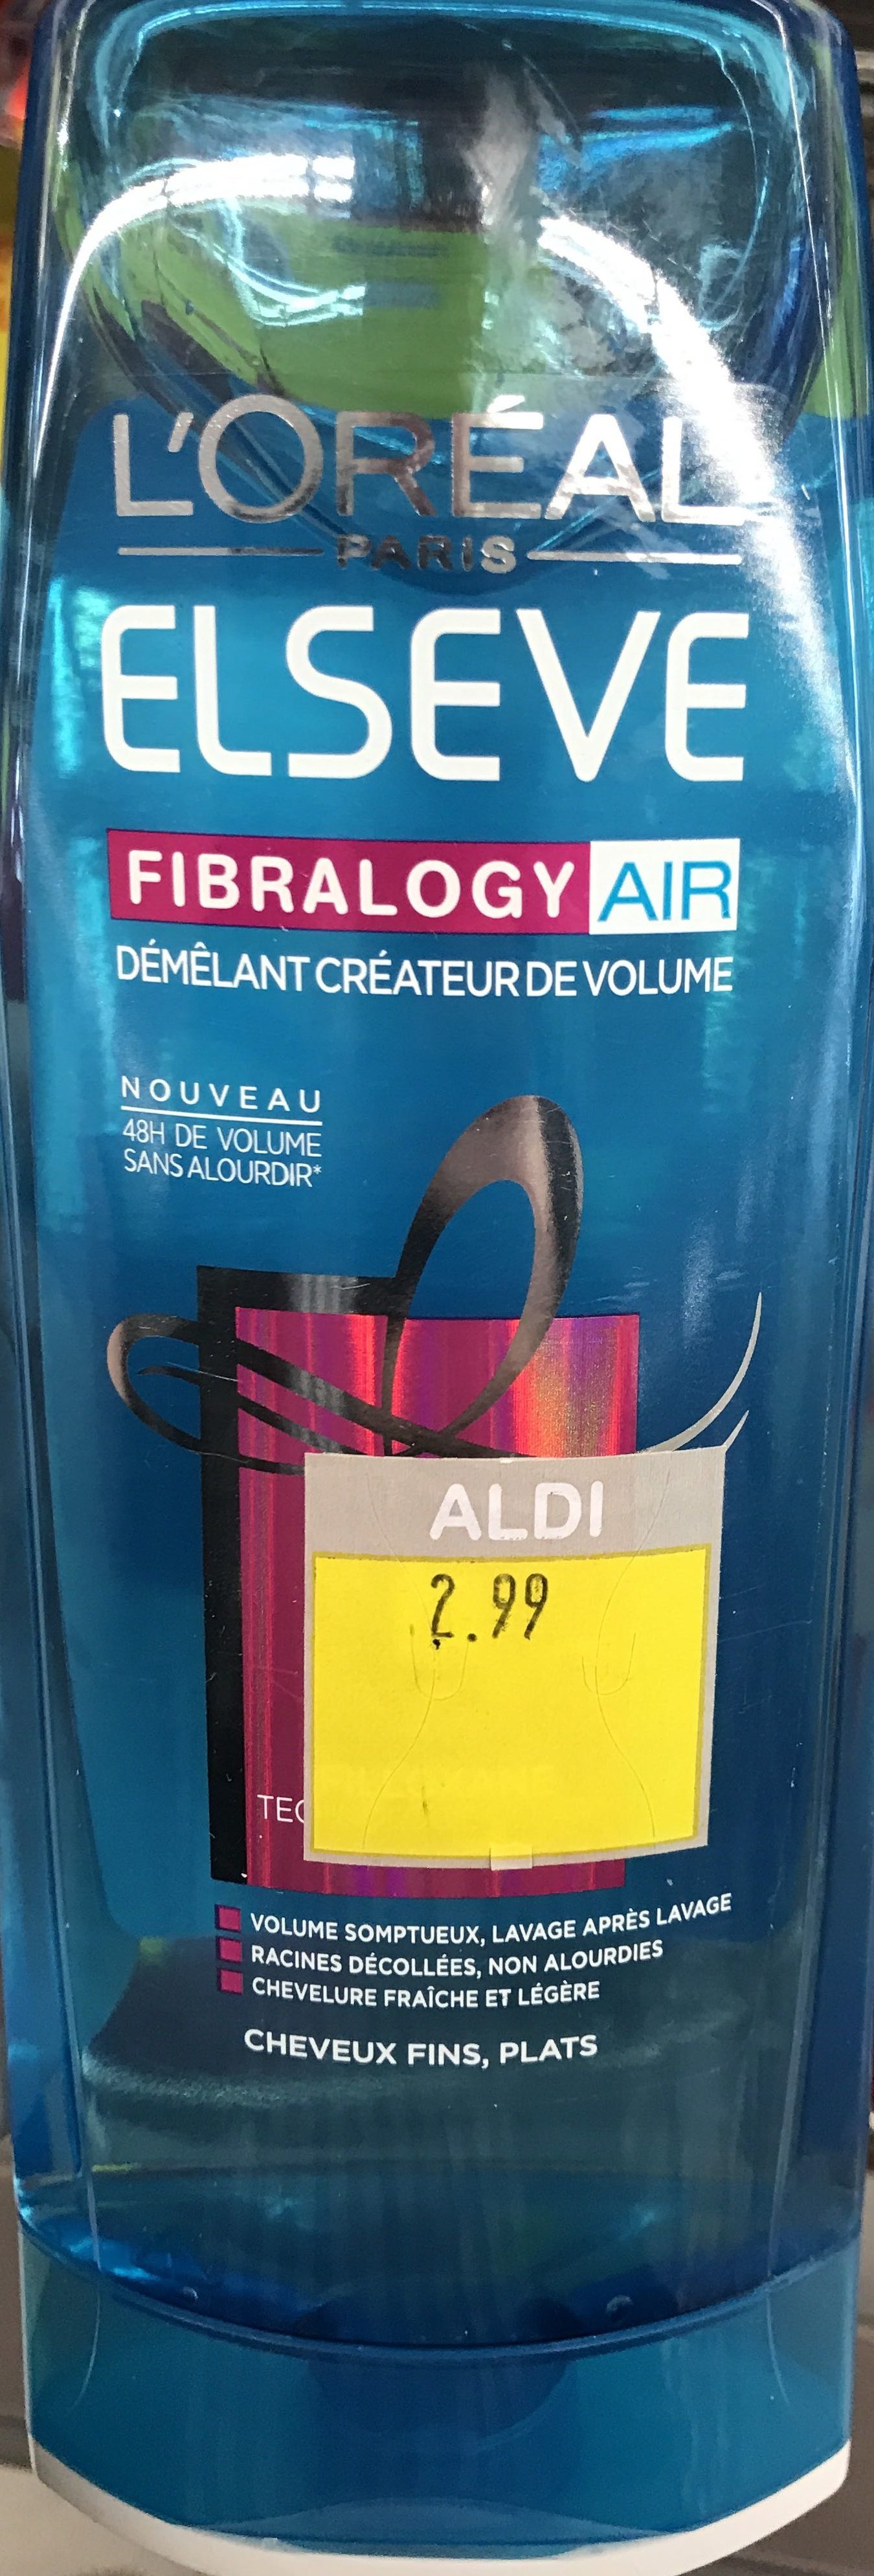 Elsève Fibralogy Air - Product - fr